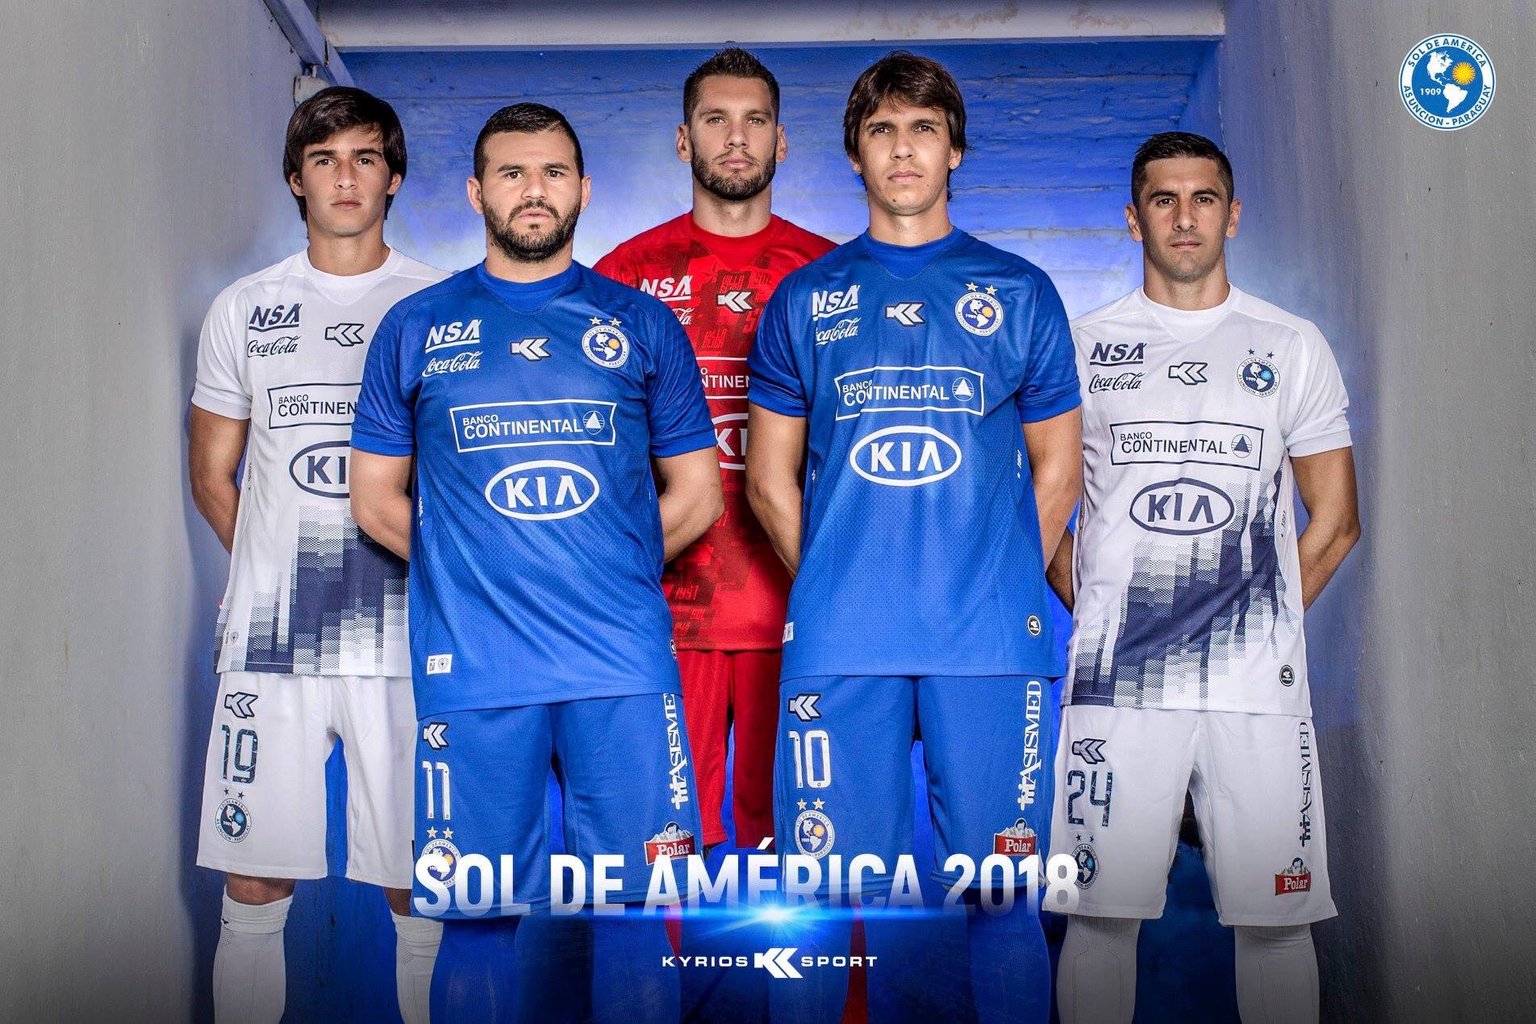 Club Sol de América Kyrios Sport kits 2018 - Todo Sobre Camisetas